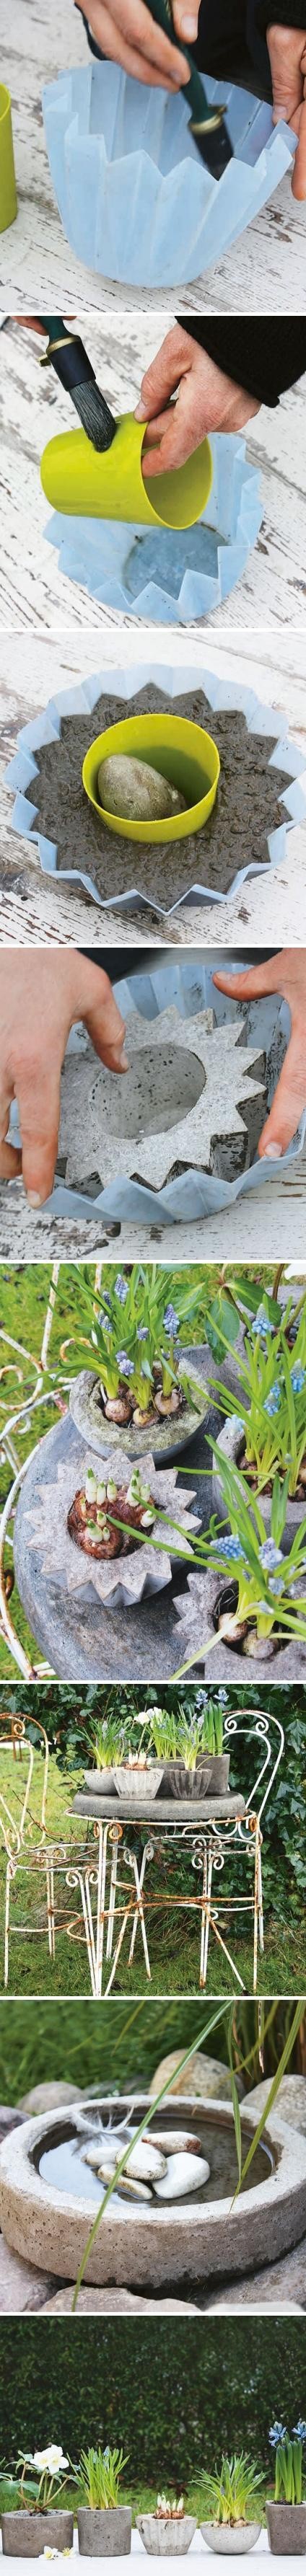 decoration jardin pots fleurs beton